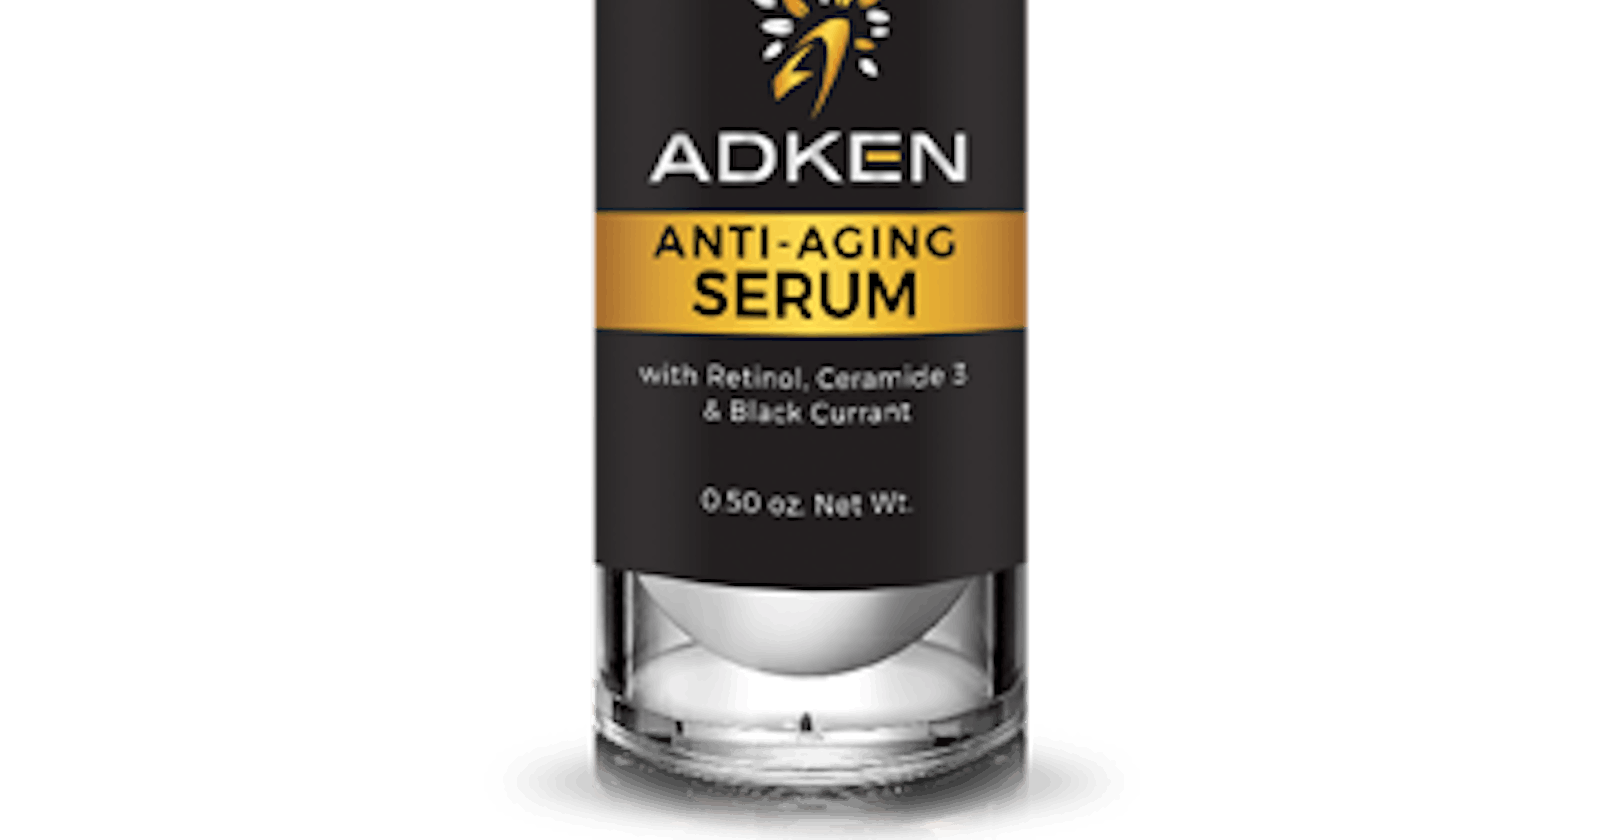 Adken Anti-Aging Serum: The Secret to Ageless Beauty